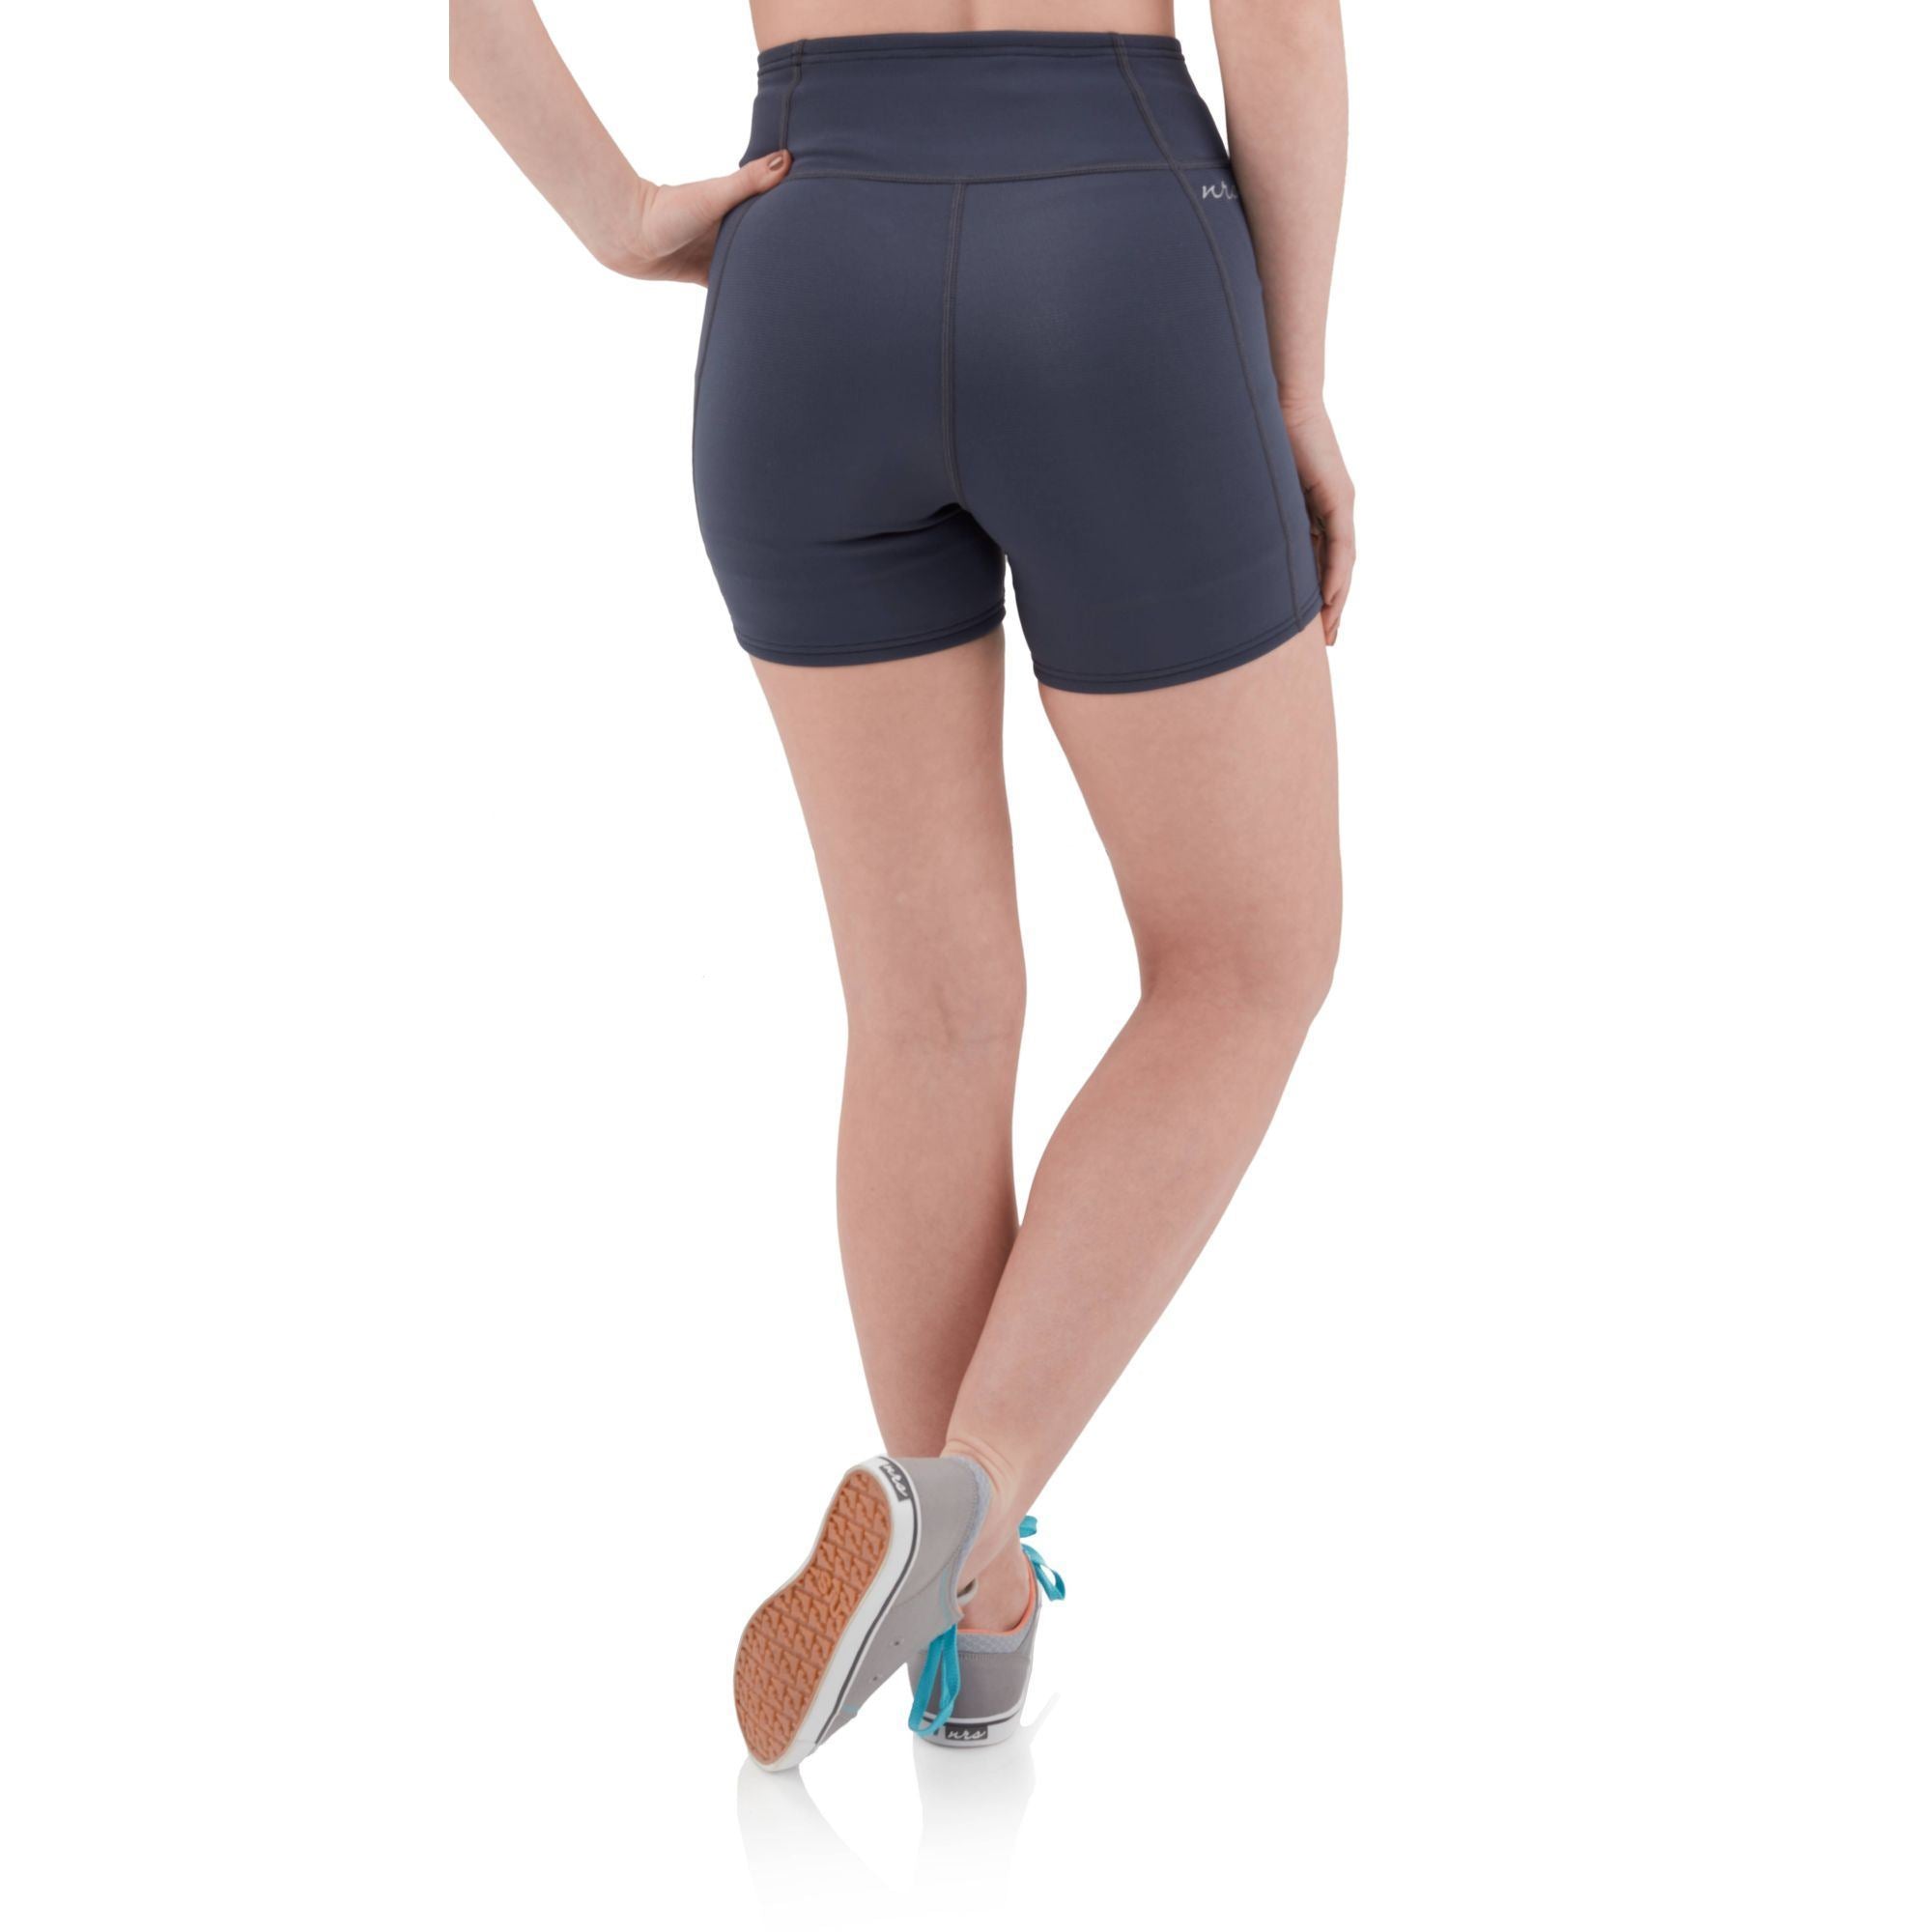 NRS HydroSkin 0.5 Neoprene Shorts, Women's